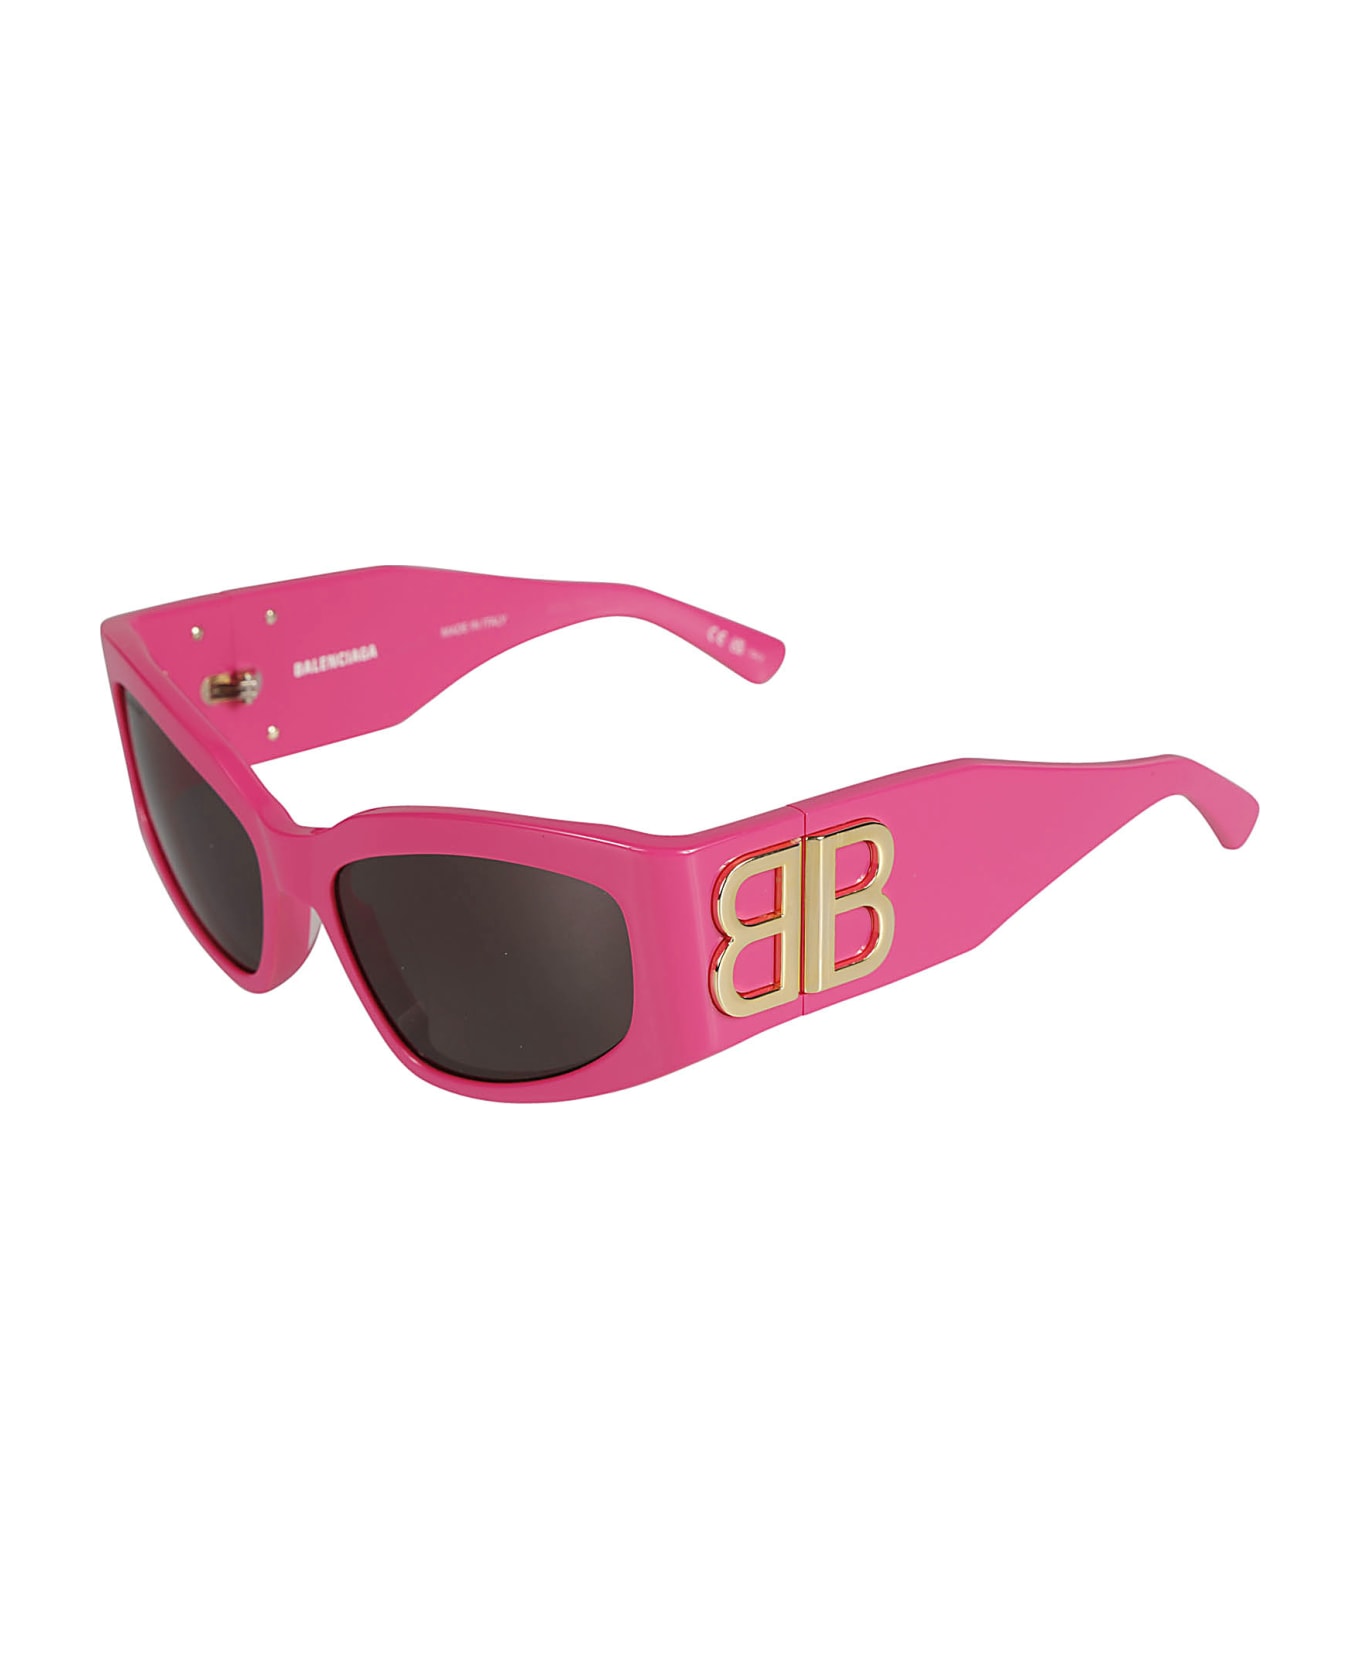 Balenciaga Eyewear Bb0321s Sunglasses - 006 PINK PINK GREY サングラス